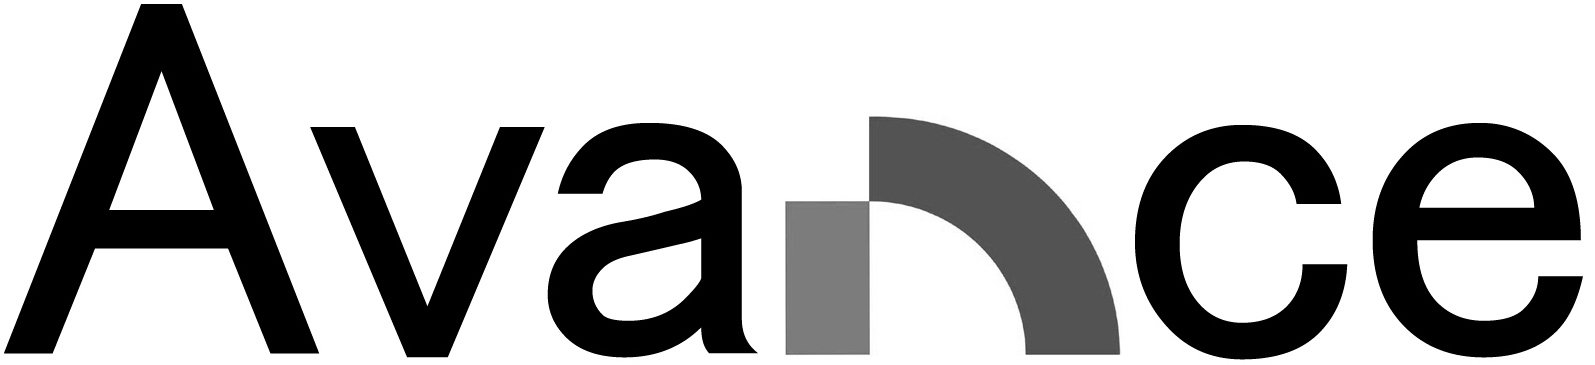 Trademark Logo AVANCE